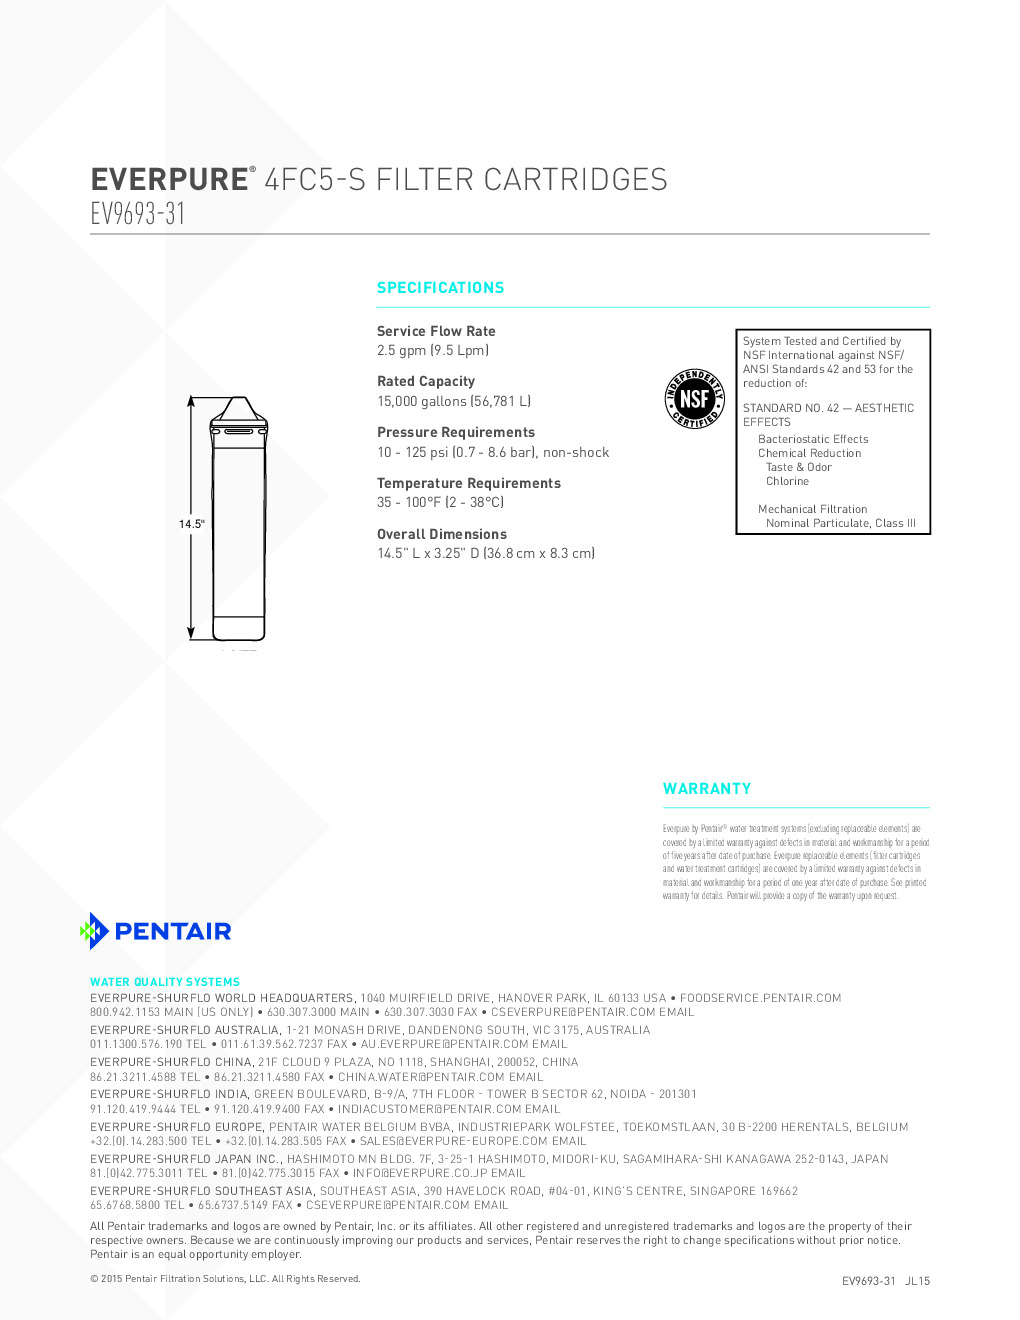 Everpure EV969331 Cartridge Water Filtration System